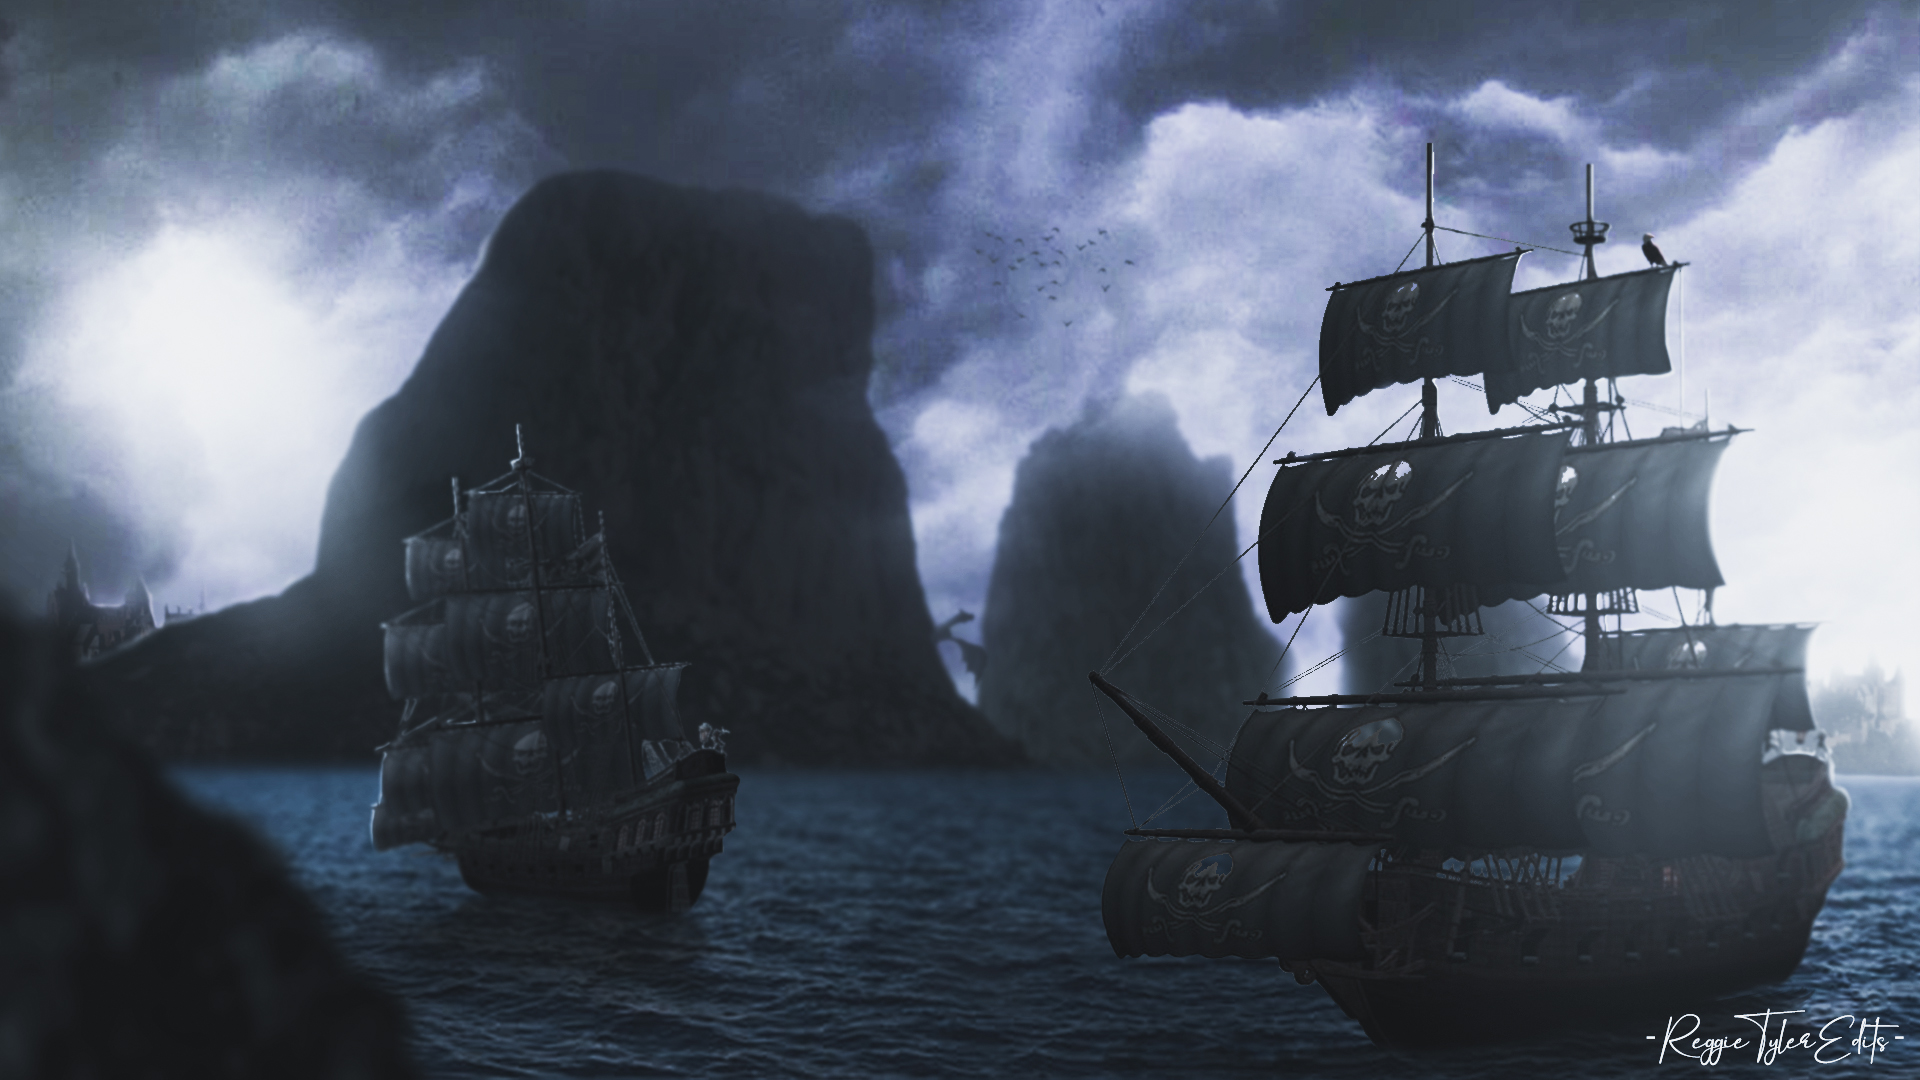 General 1920x1080 pirates mountain chain Pirate ship photoshopped artwork dark war